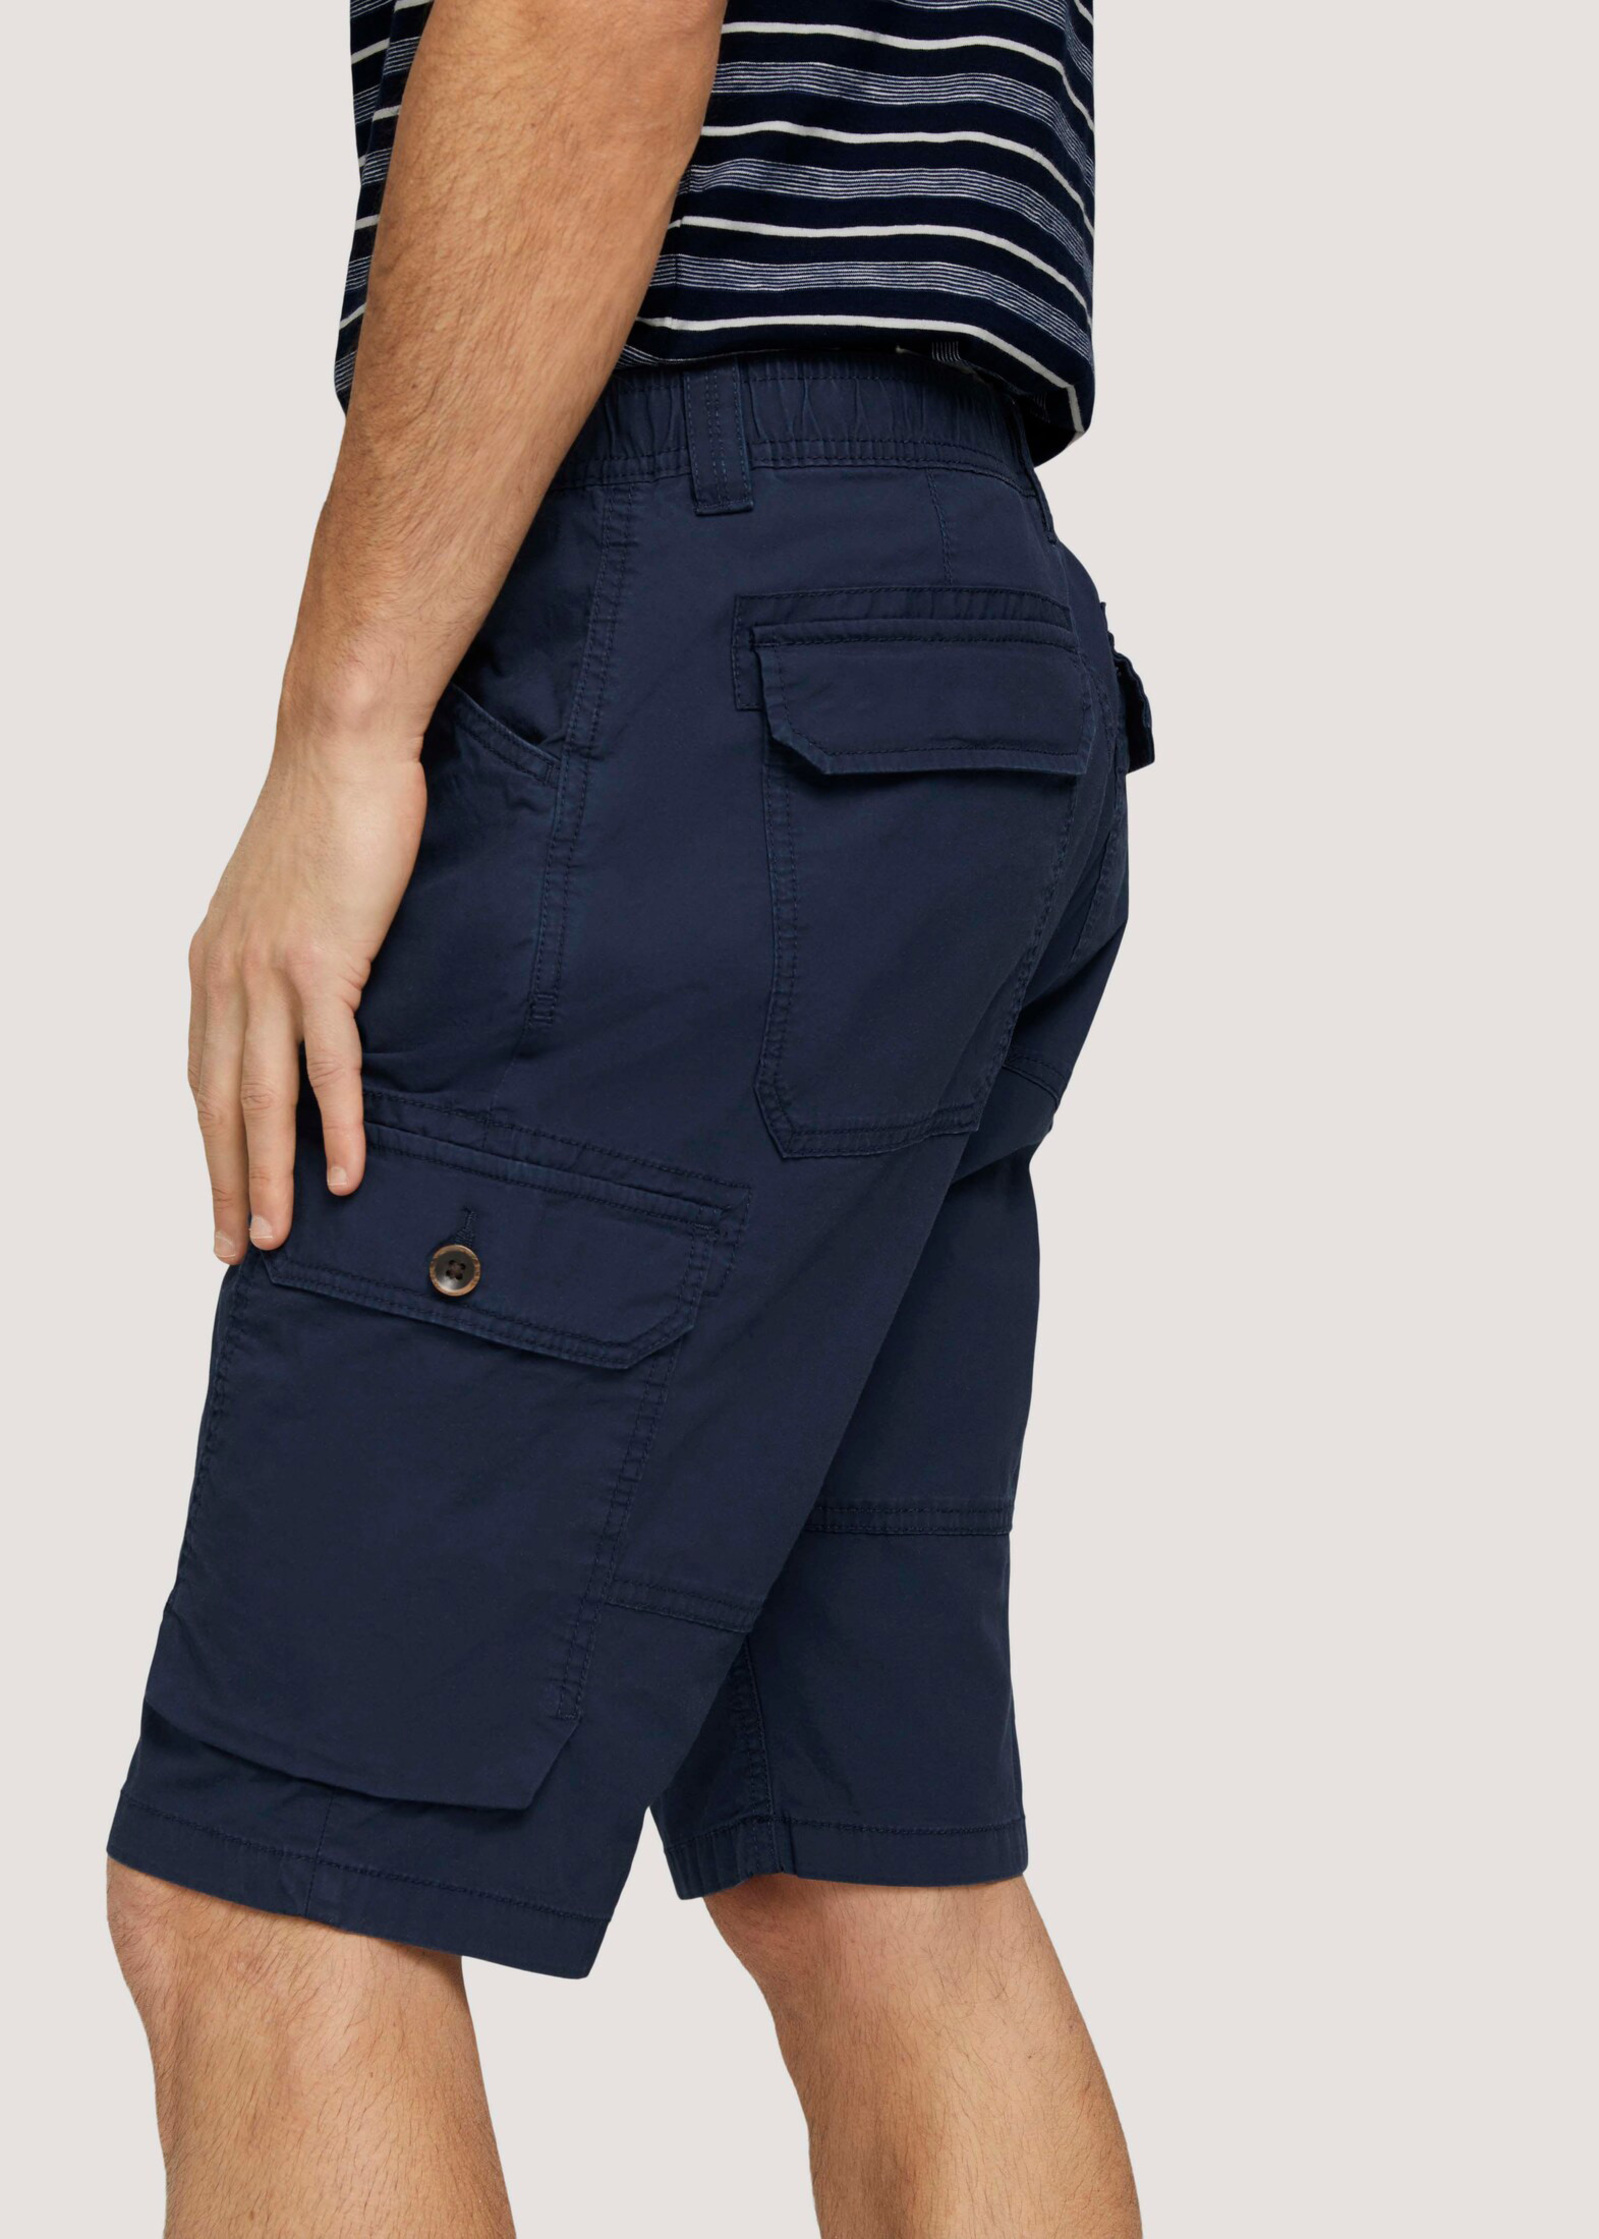 Cargo Size S 1026090-10932 - Sailor Blue Tom Lightweight Shorts Tailor